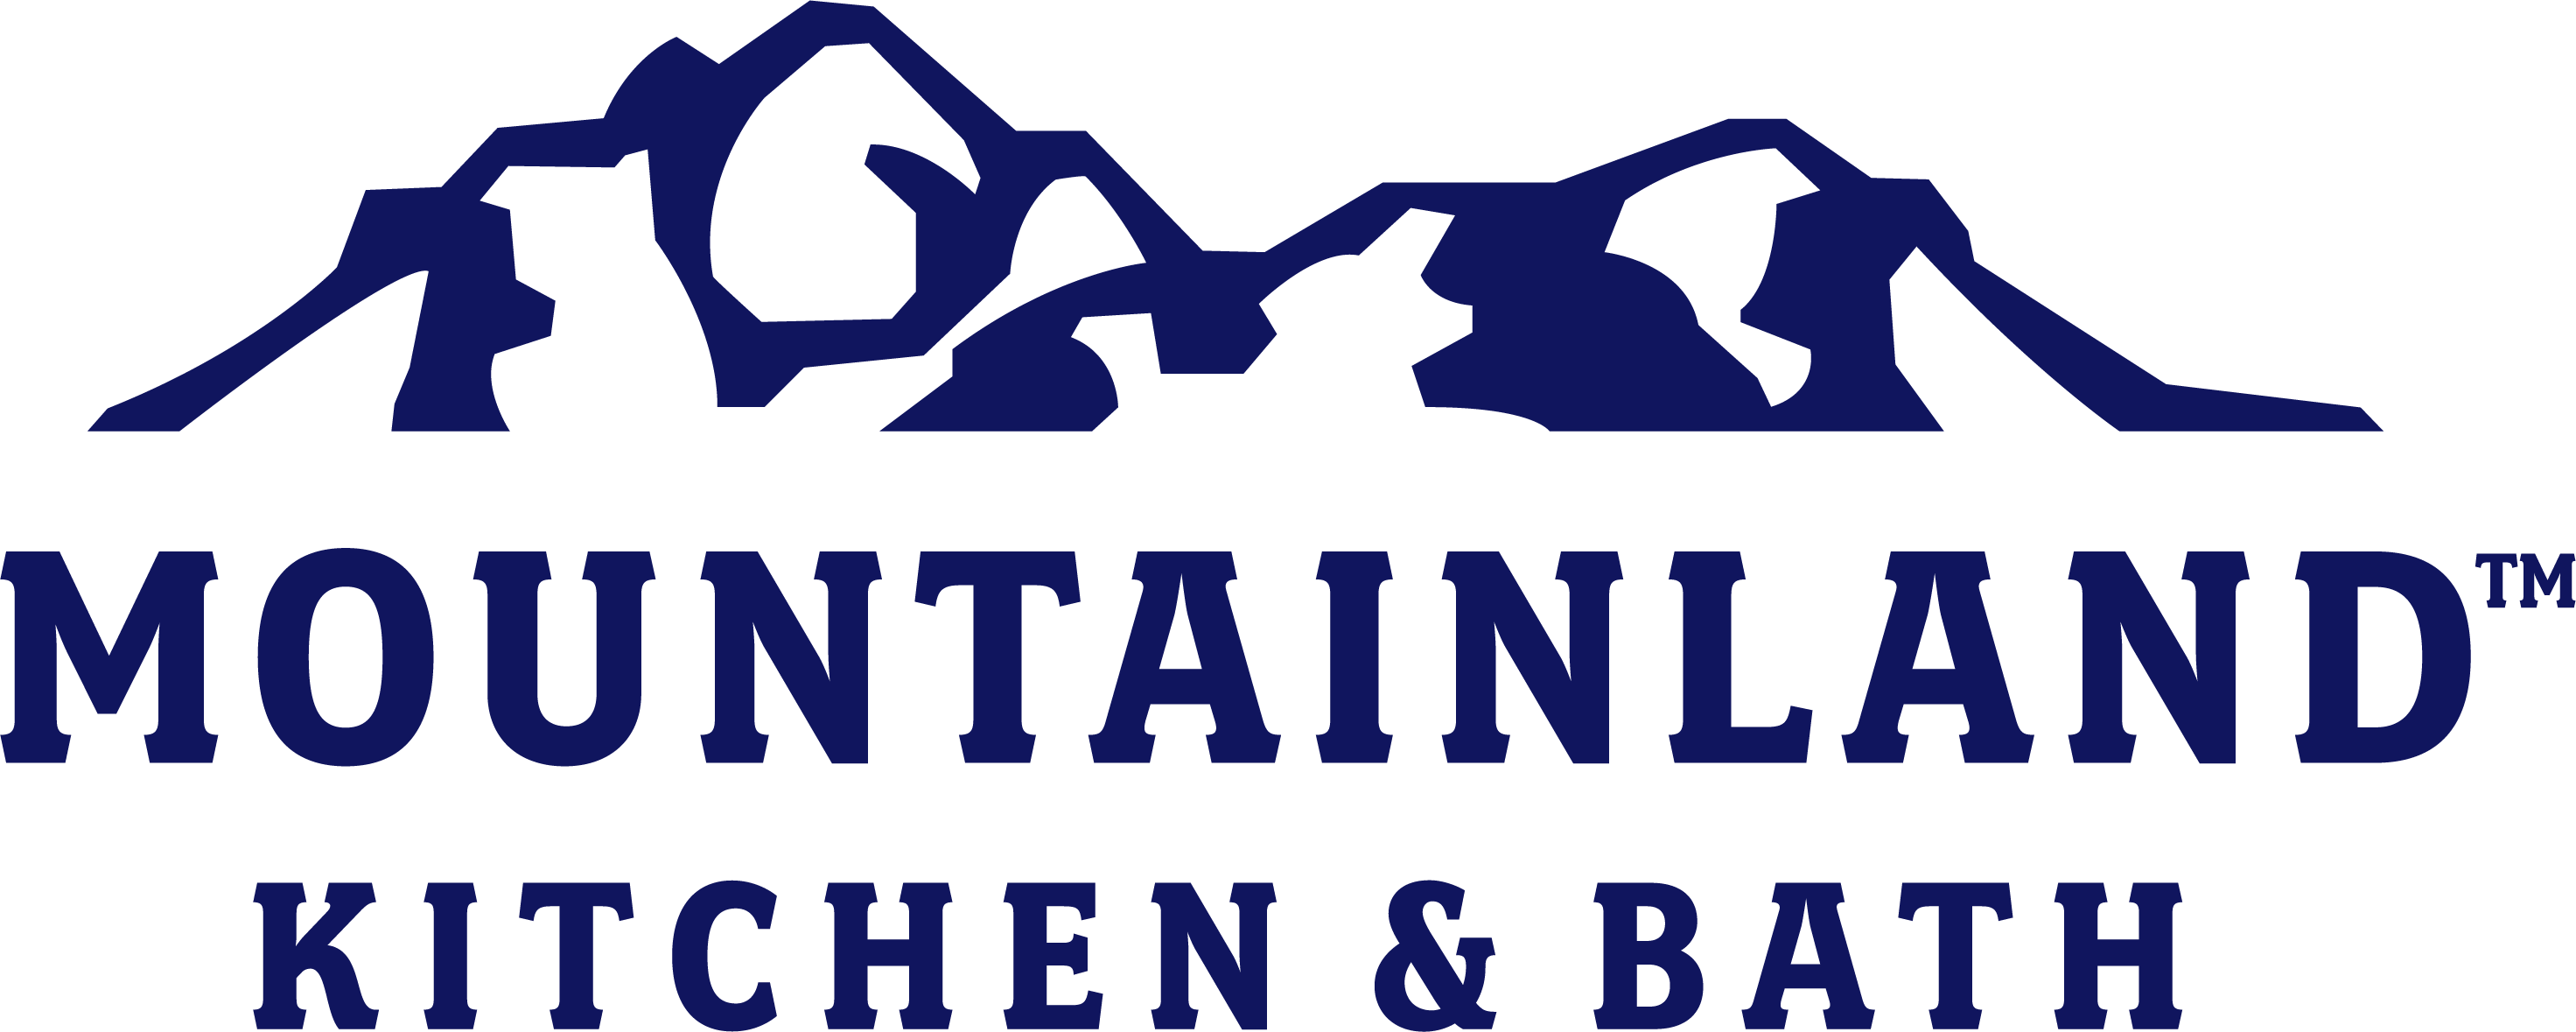 Mountainland Kitchen and Bath